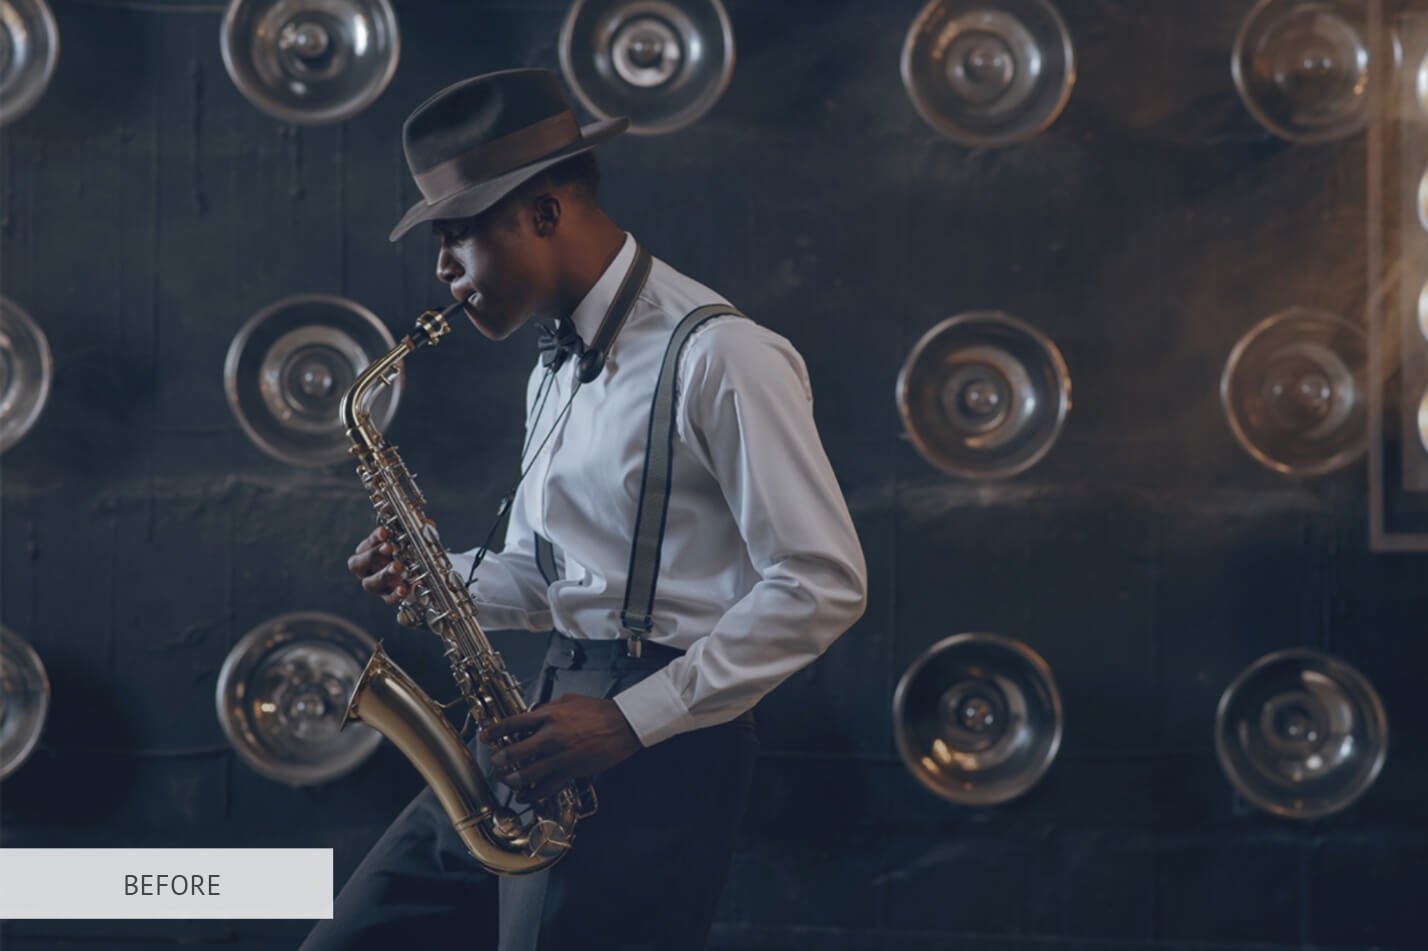 black jazzman in hat plays the saxophone on stage lnhtgd5 615